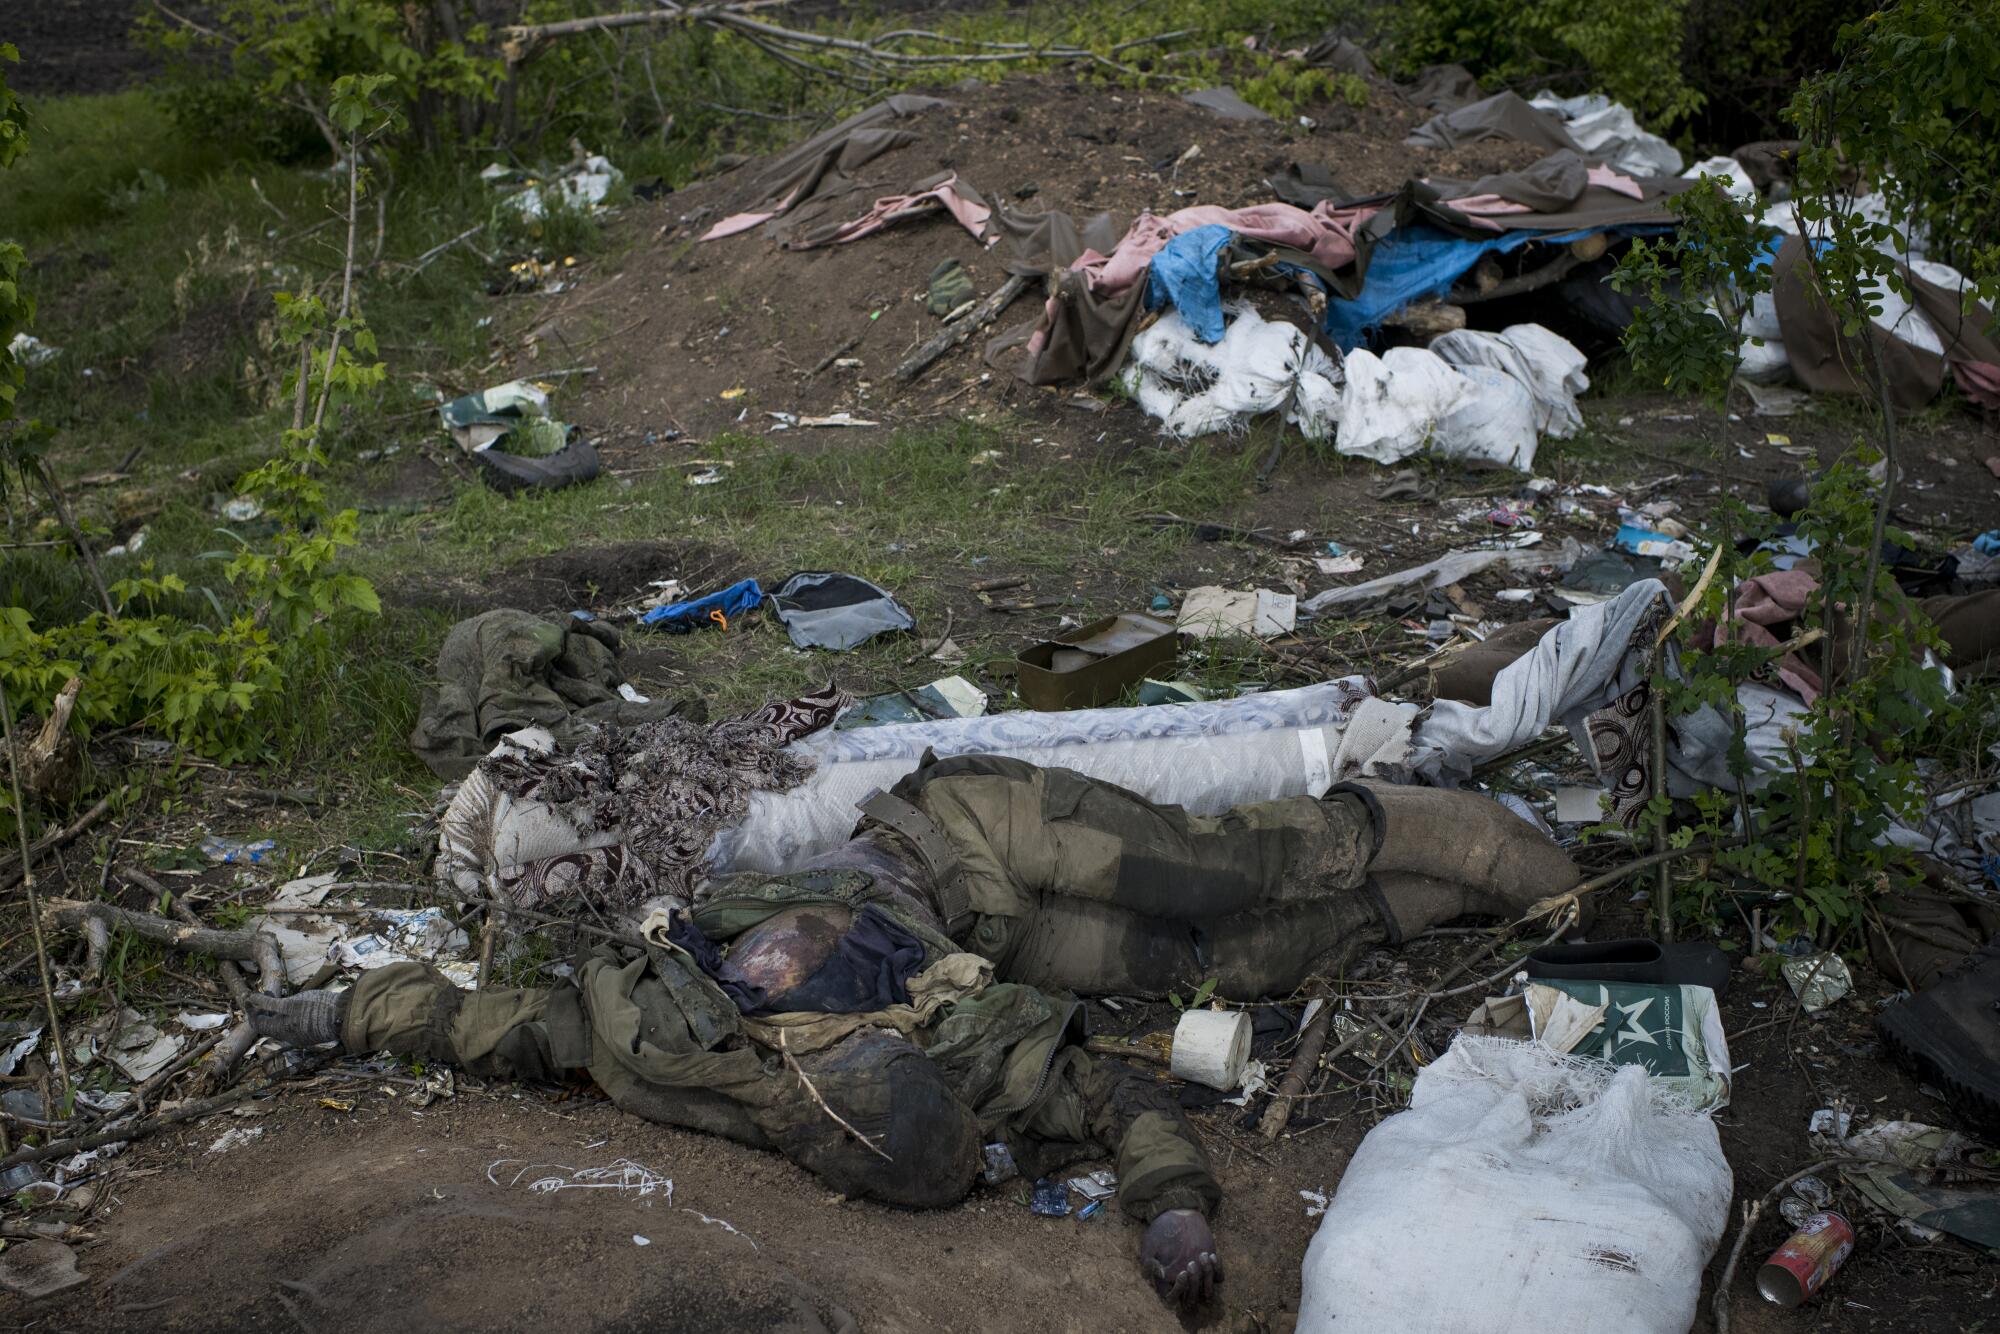 The body of a Russian soldier lies near debris.